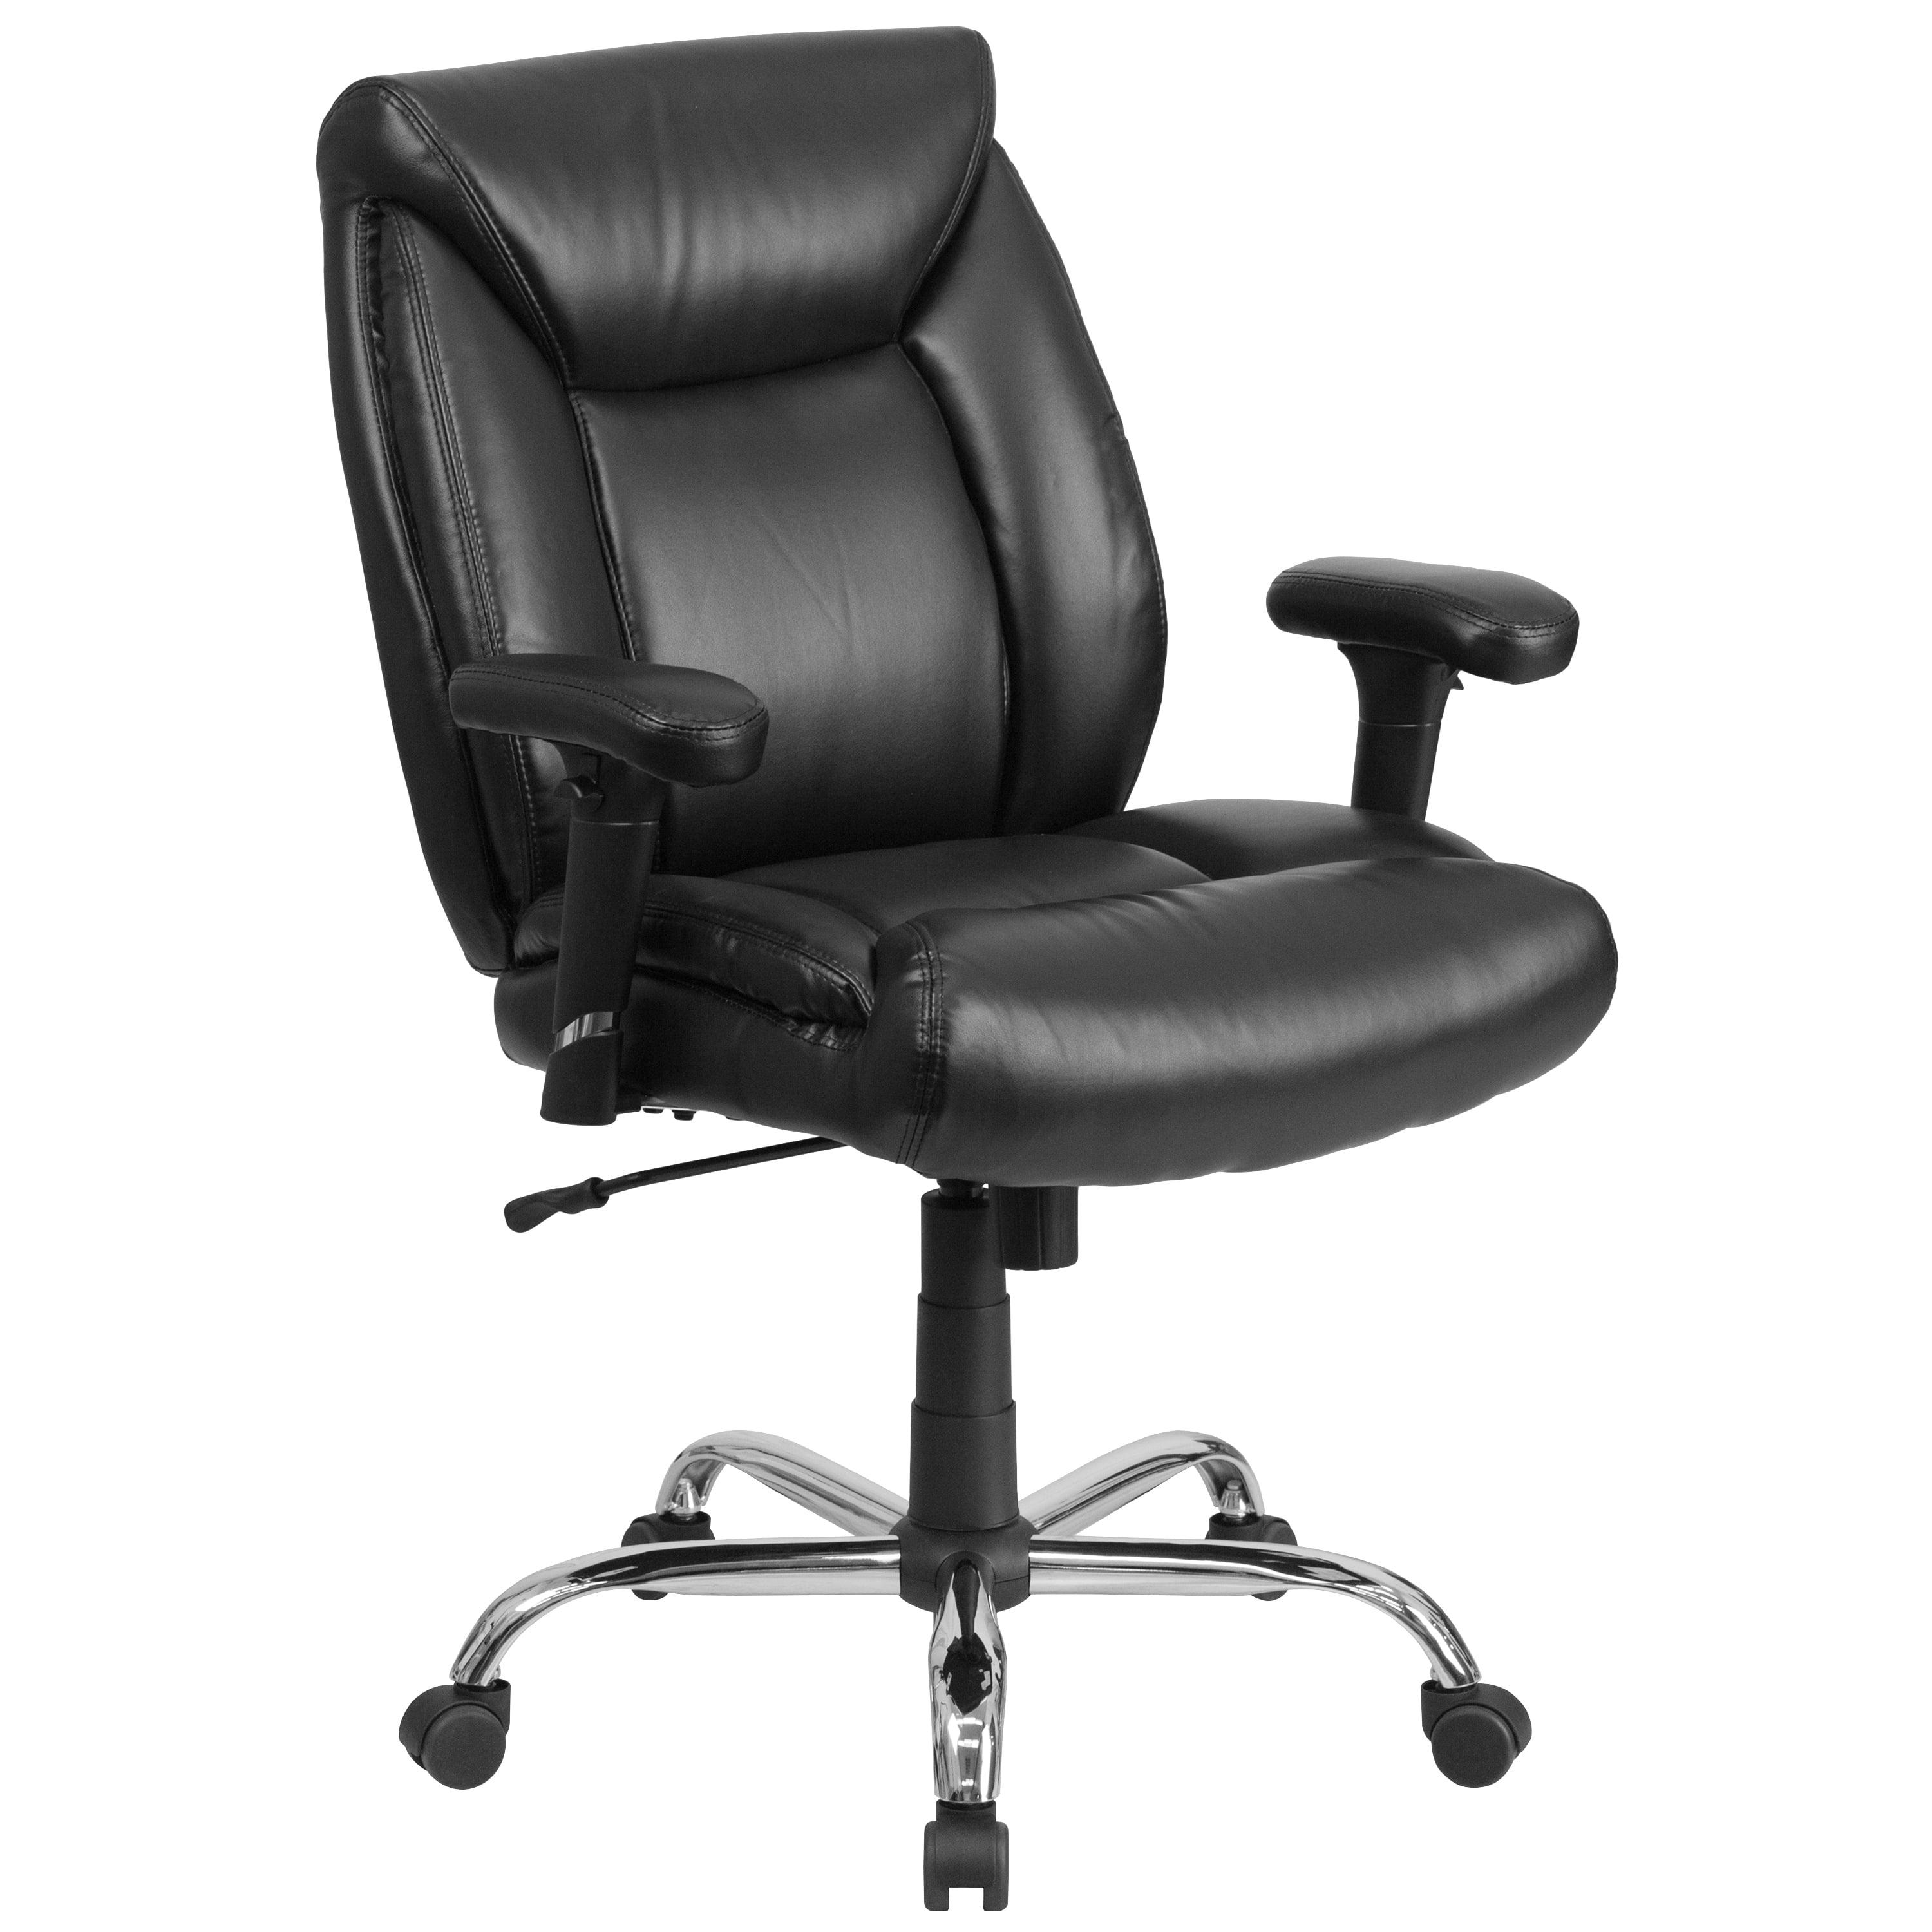 ErgoFlex 360 Black LeatherSoft Swivel Task Chair with Adjustable Arms